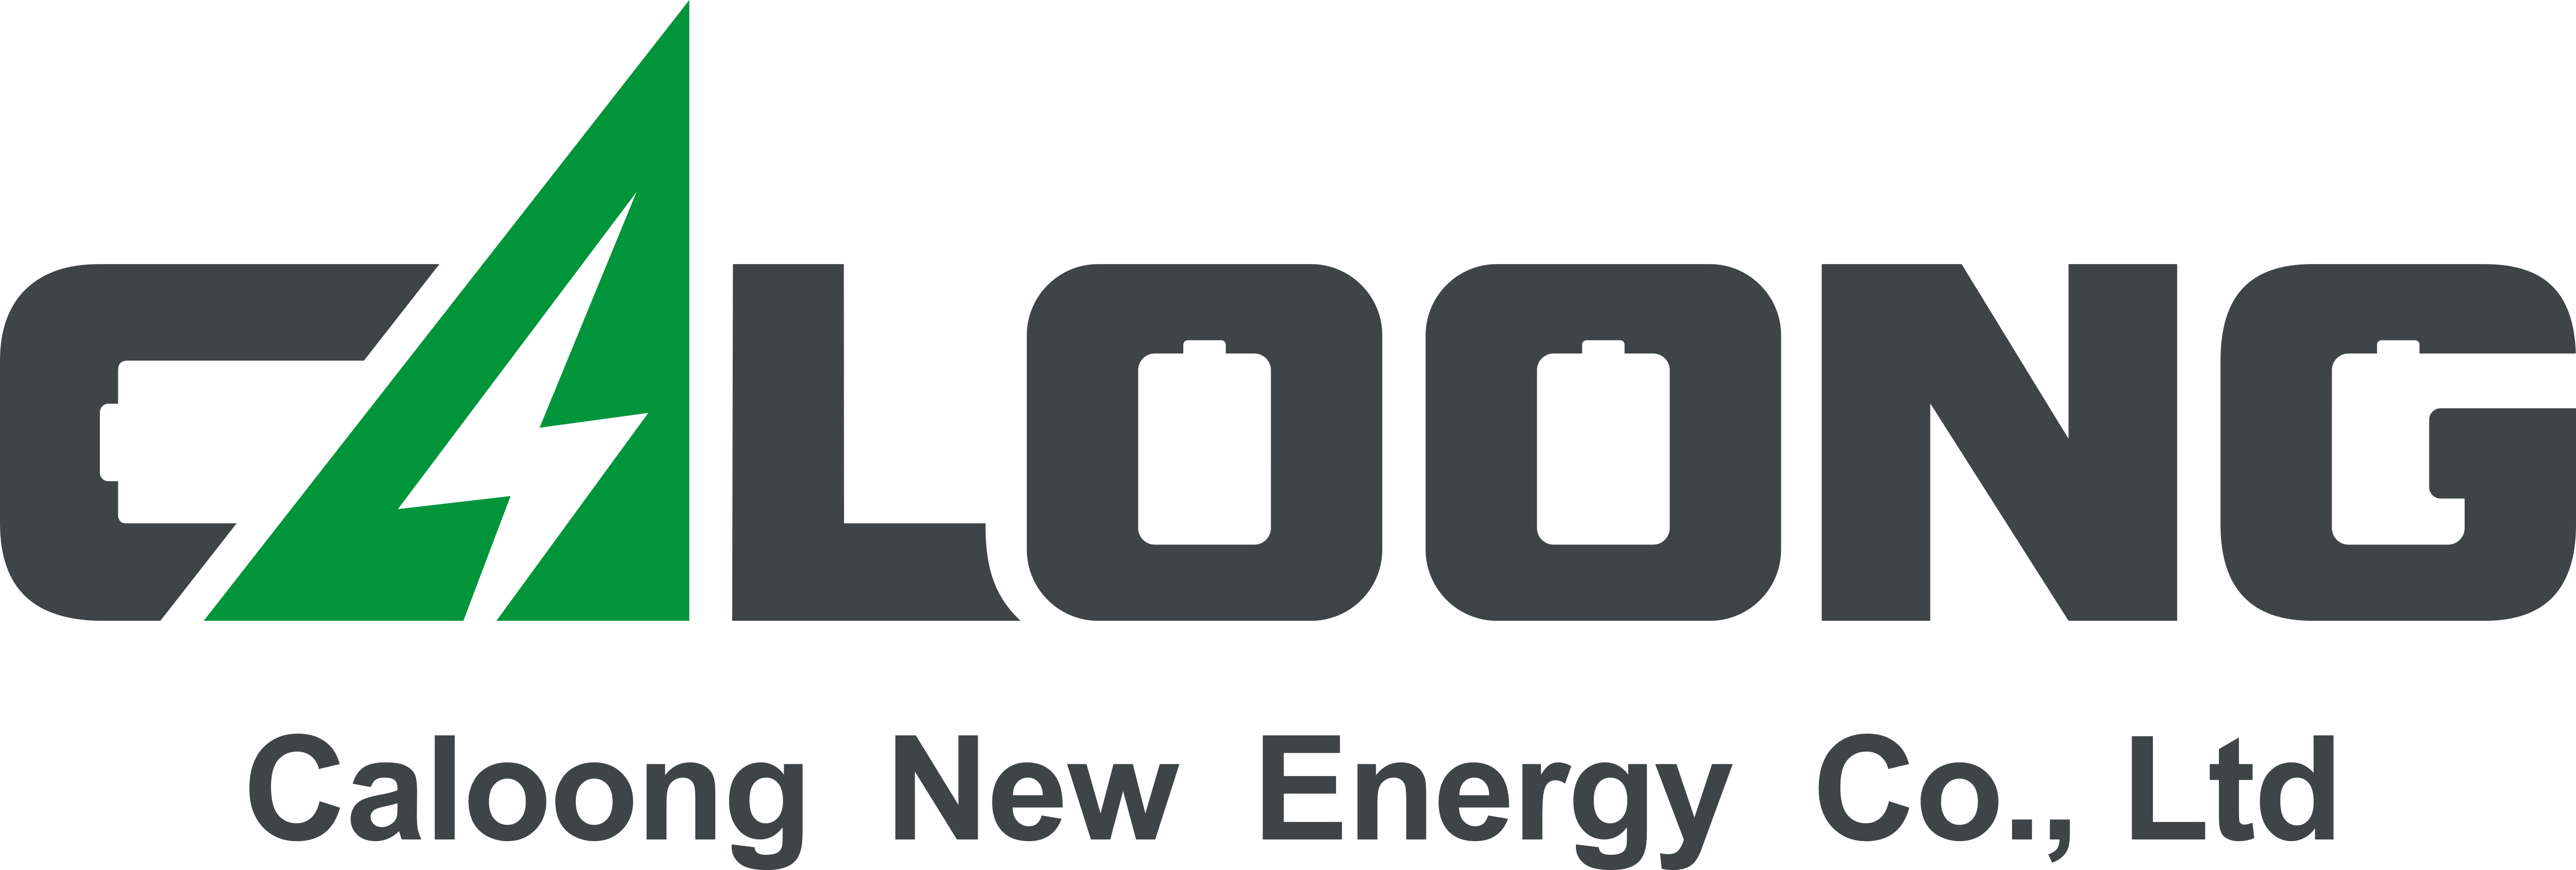 Caloong New Energy Co., Ltd